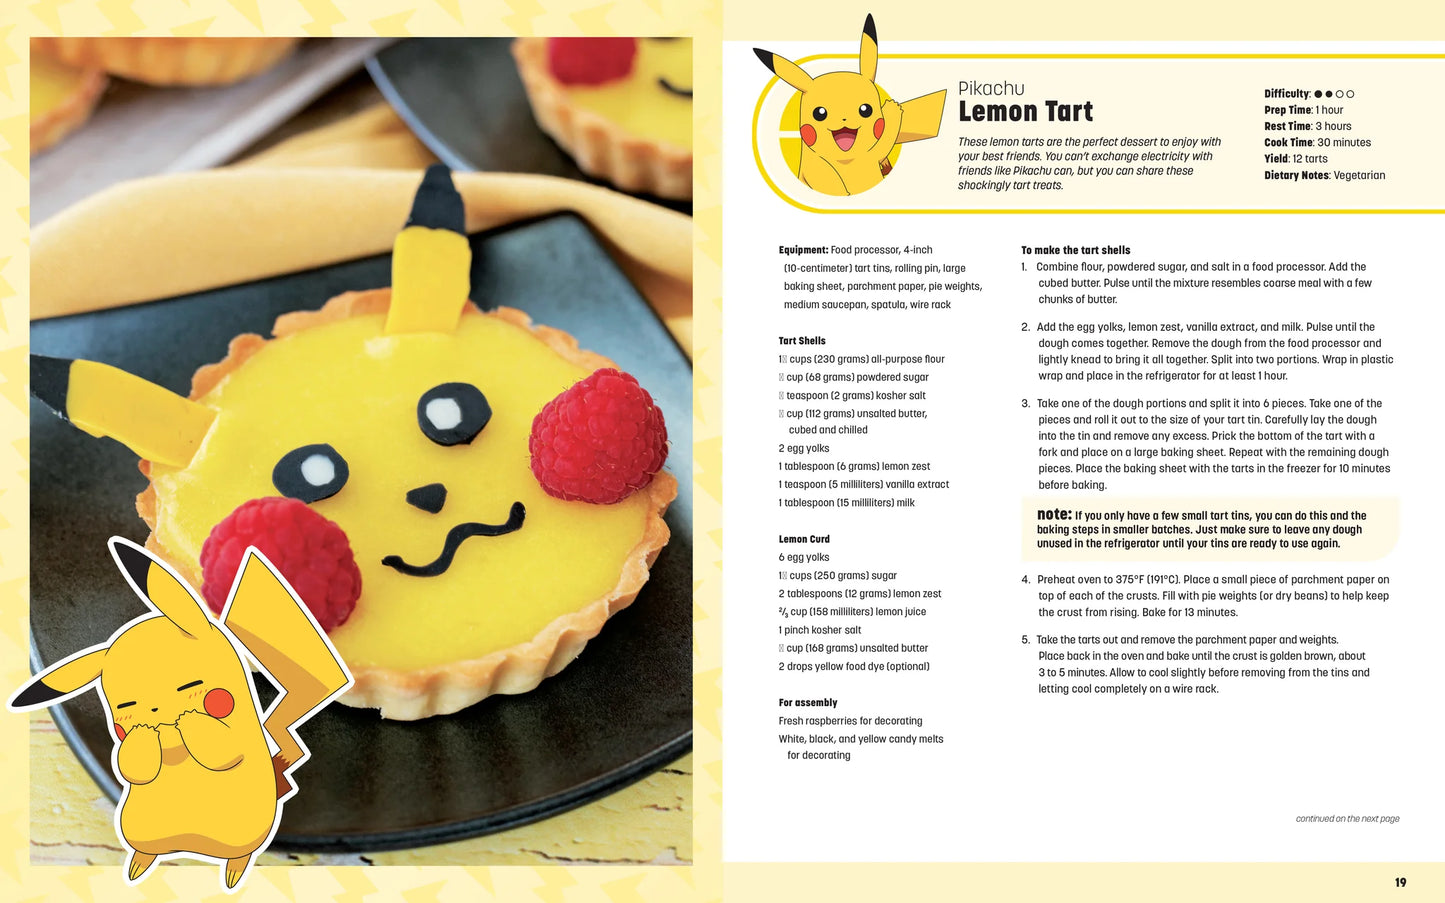 My Pokemon Cookbook